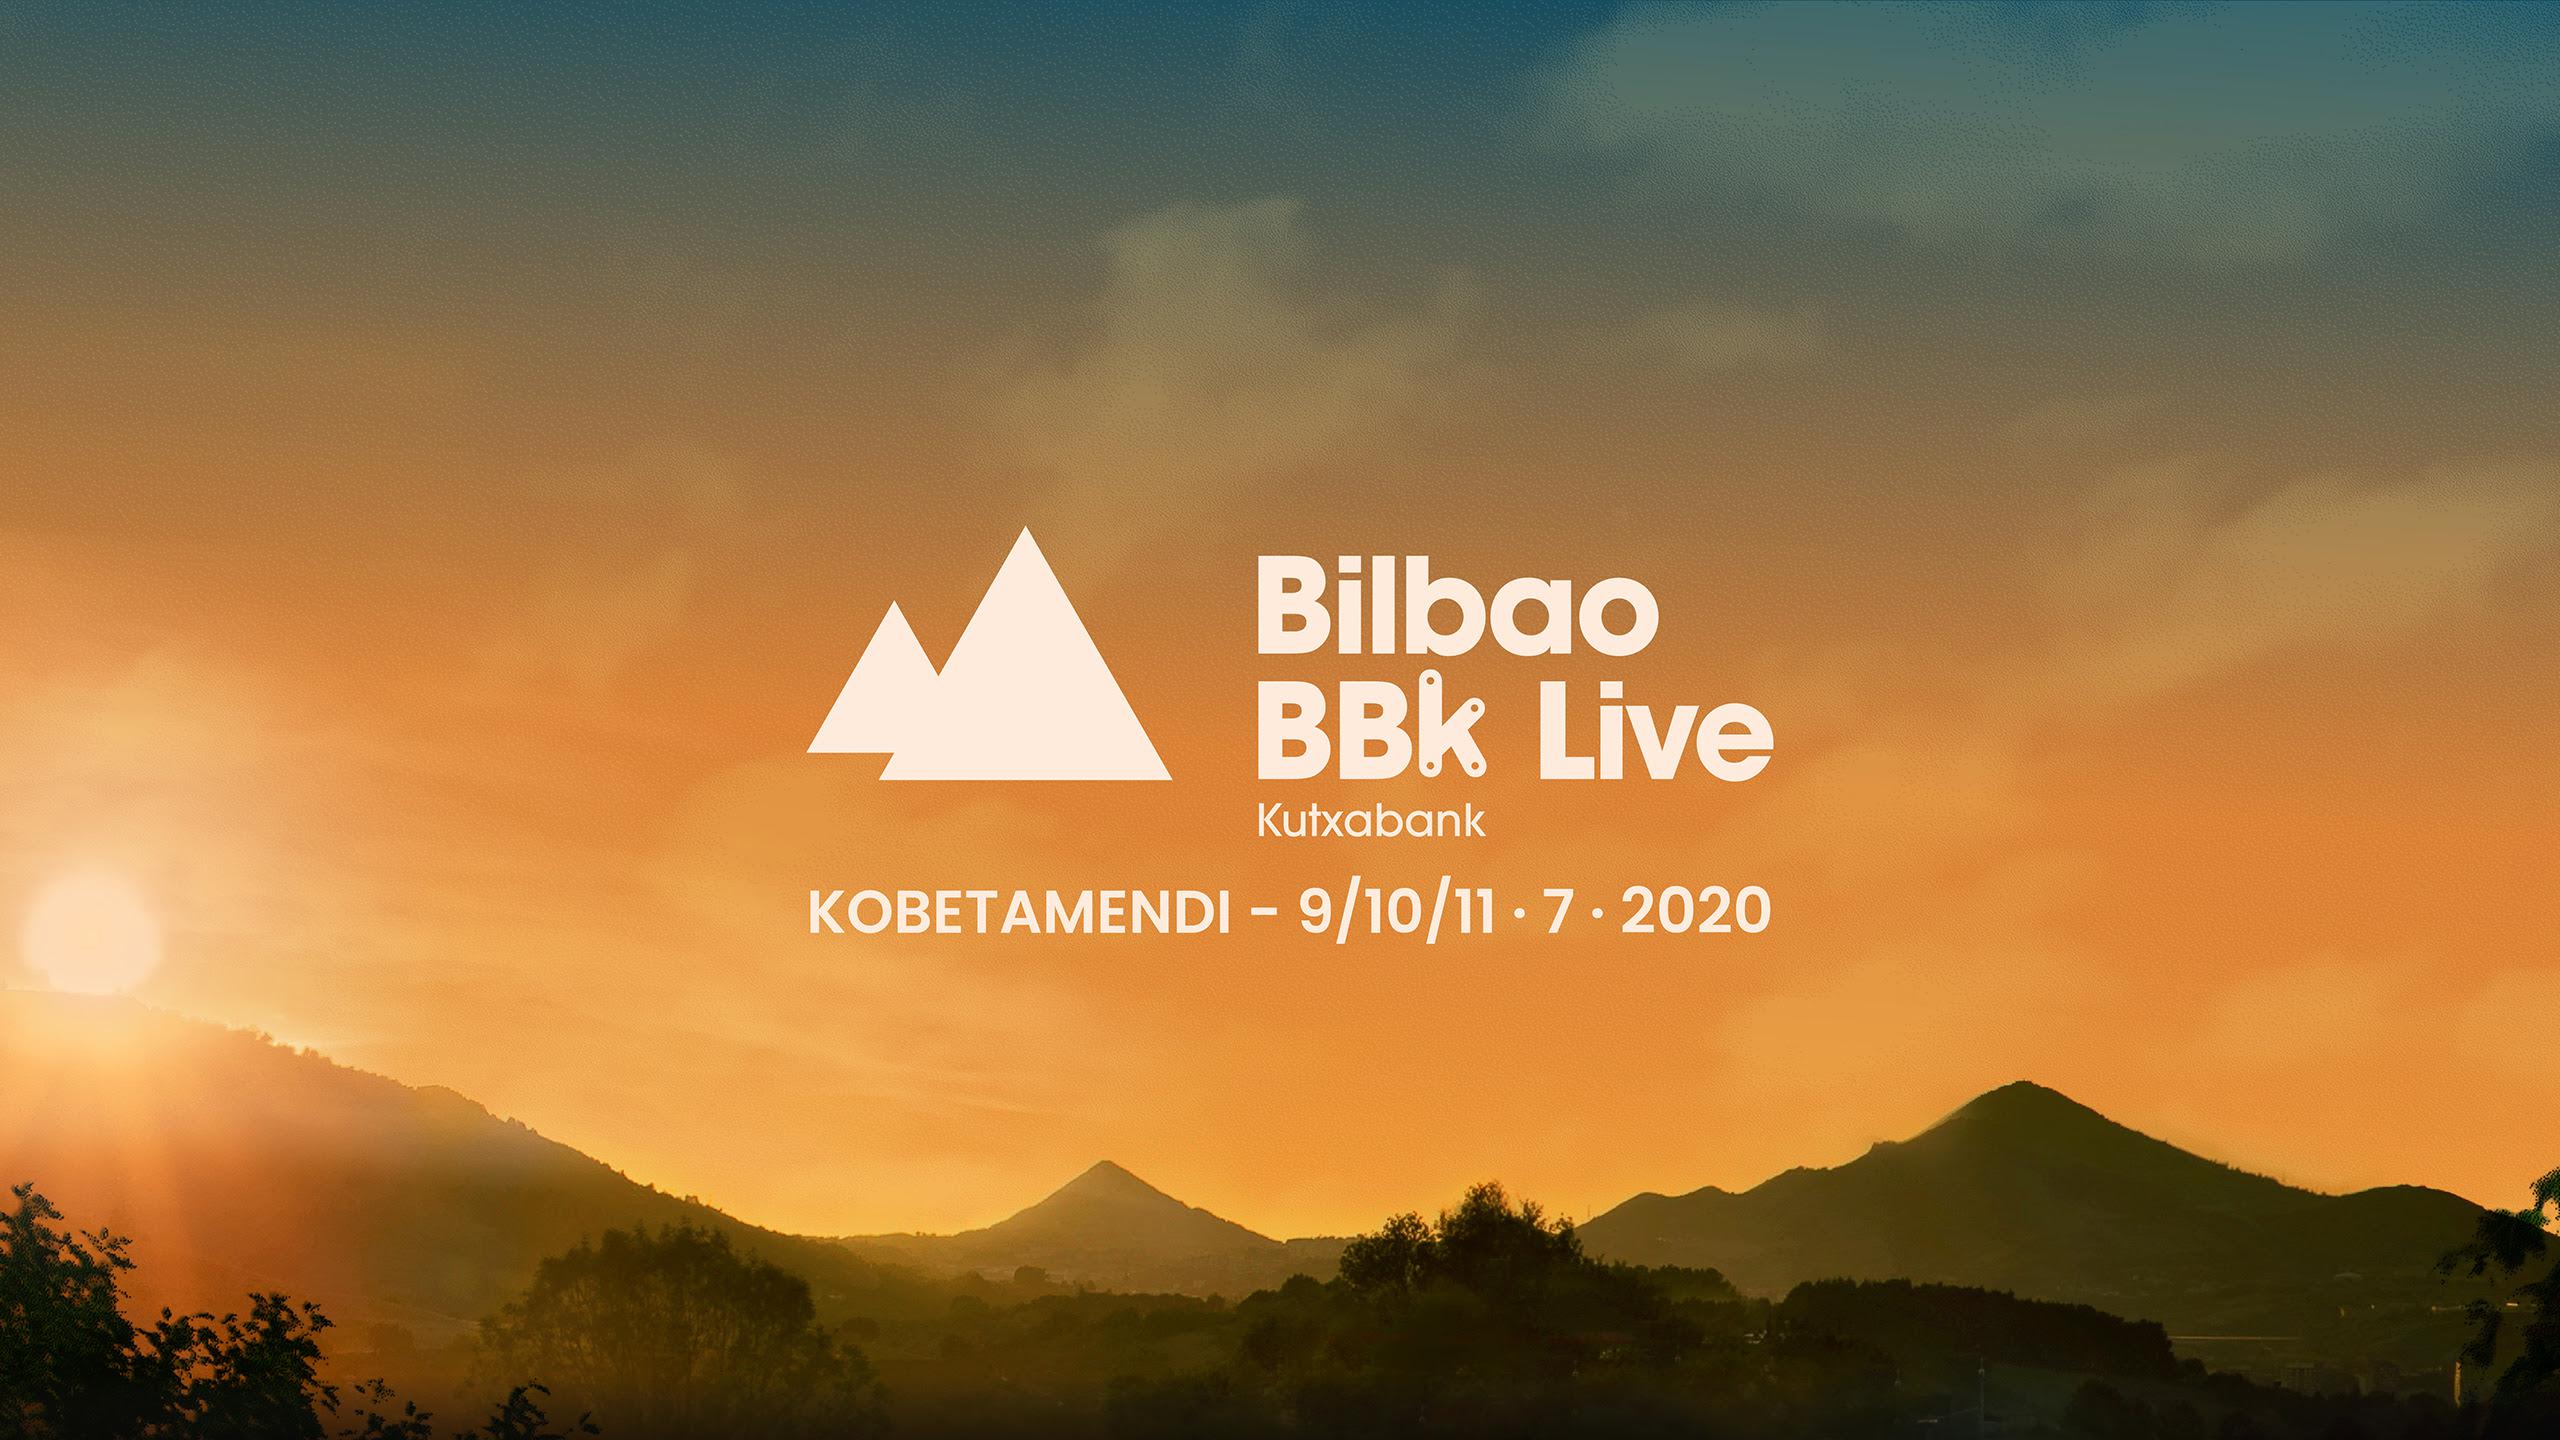 Bilbao BBK Live 2020. Tickets, lineup, bands for Bilbao BBK Live 2020